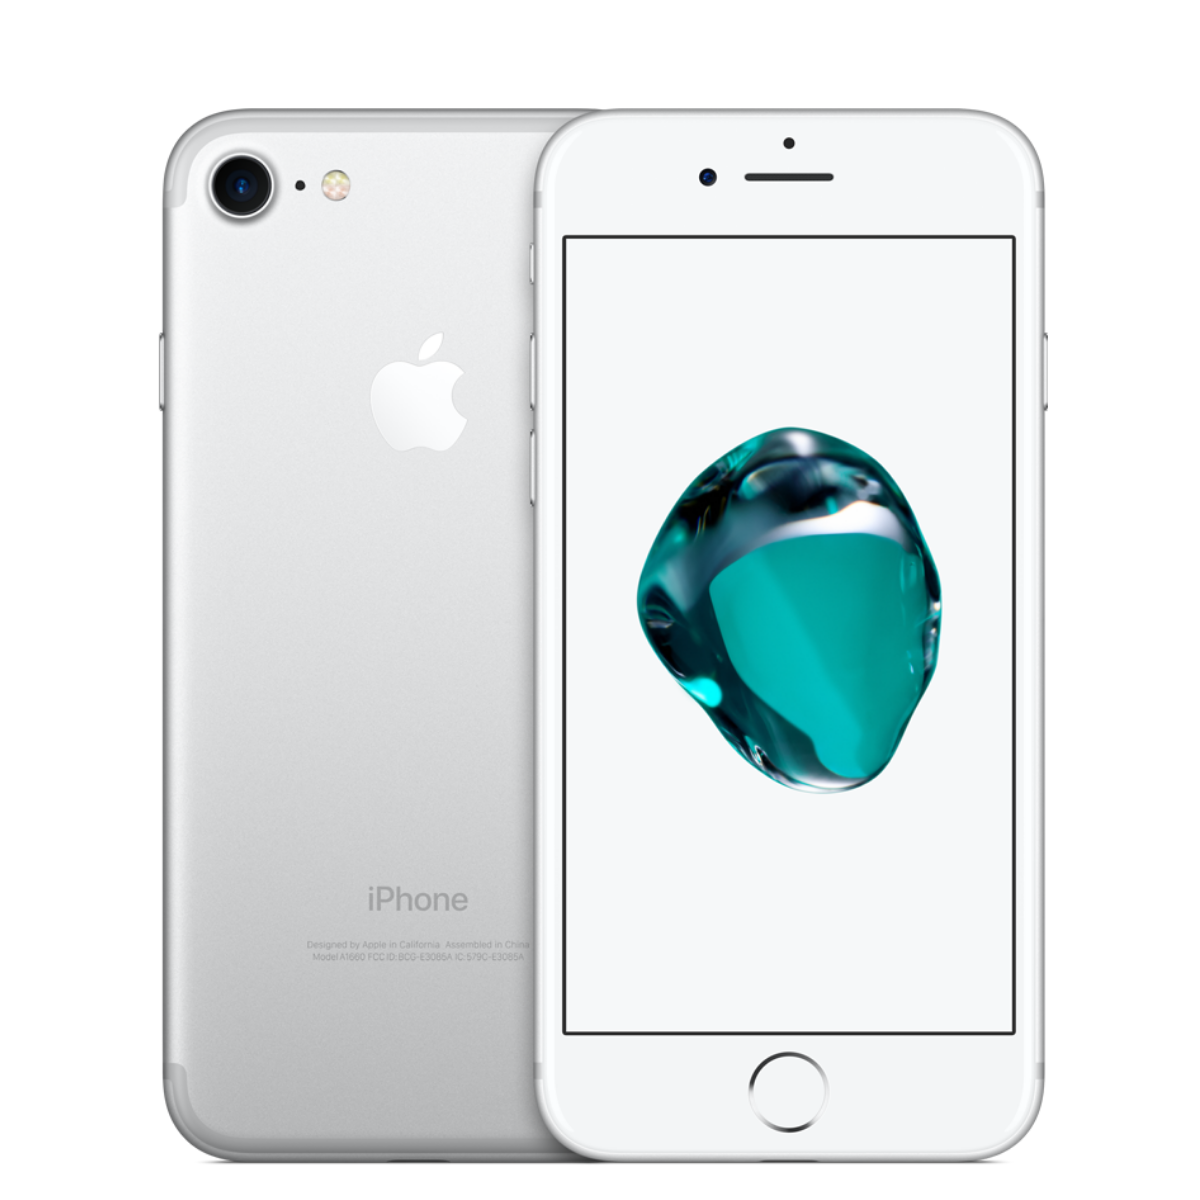 Sim Free iPhone 7 128GB Unlocked Mobile Phone - Silver